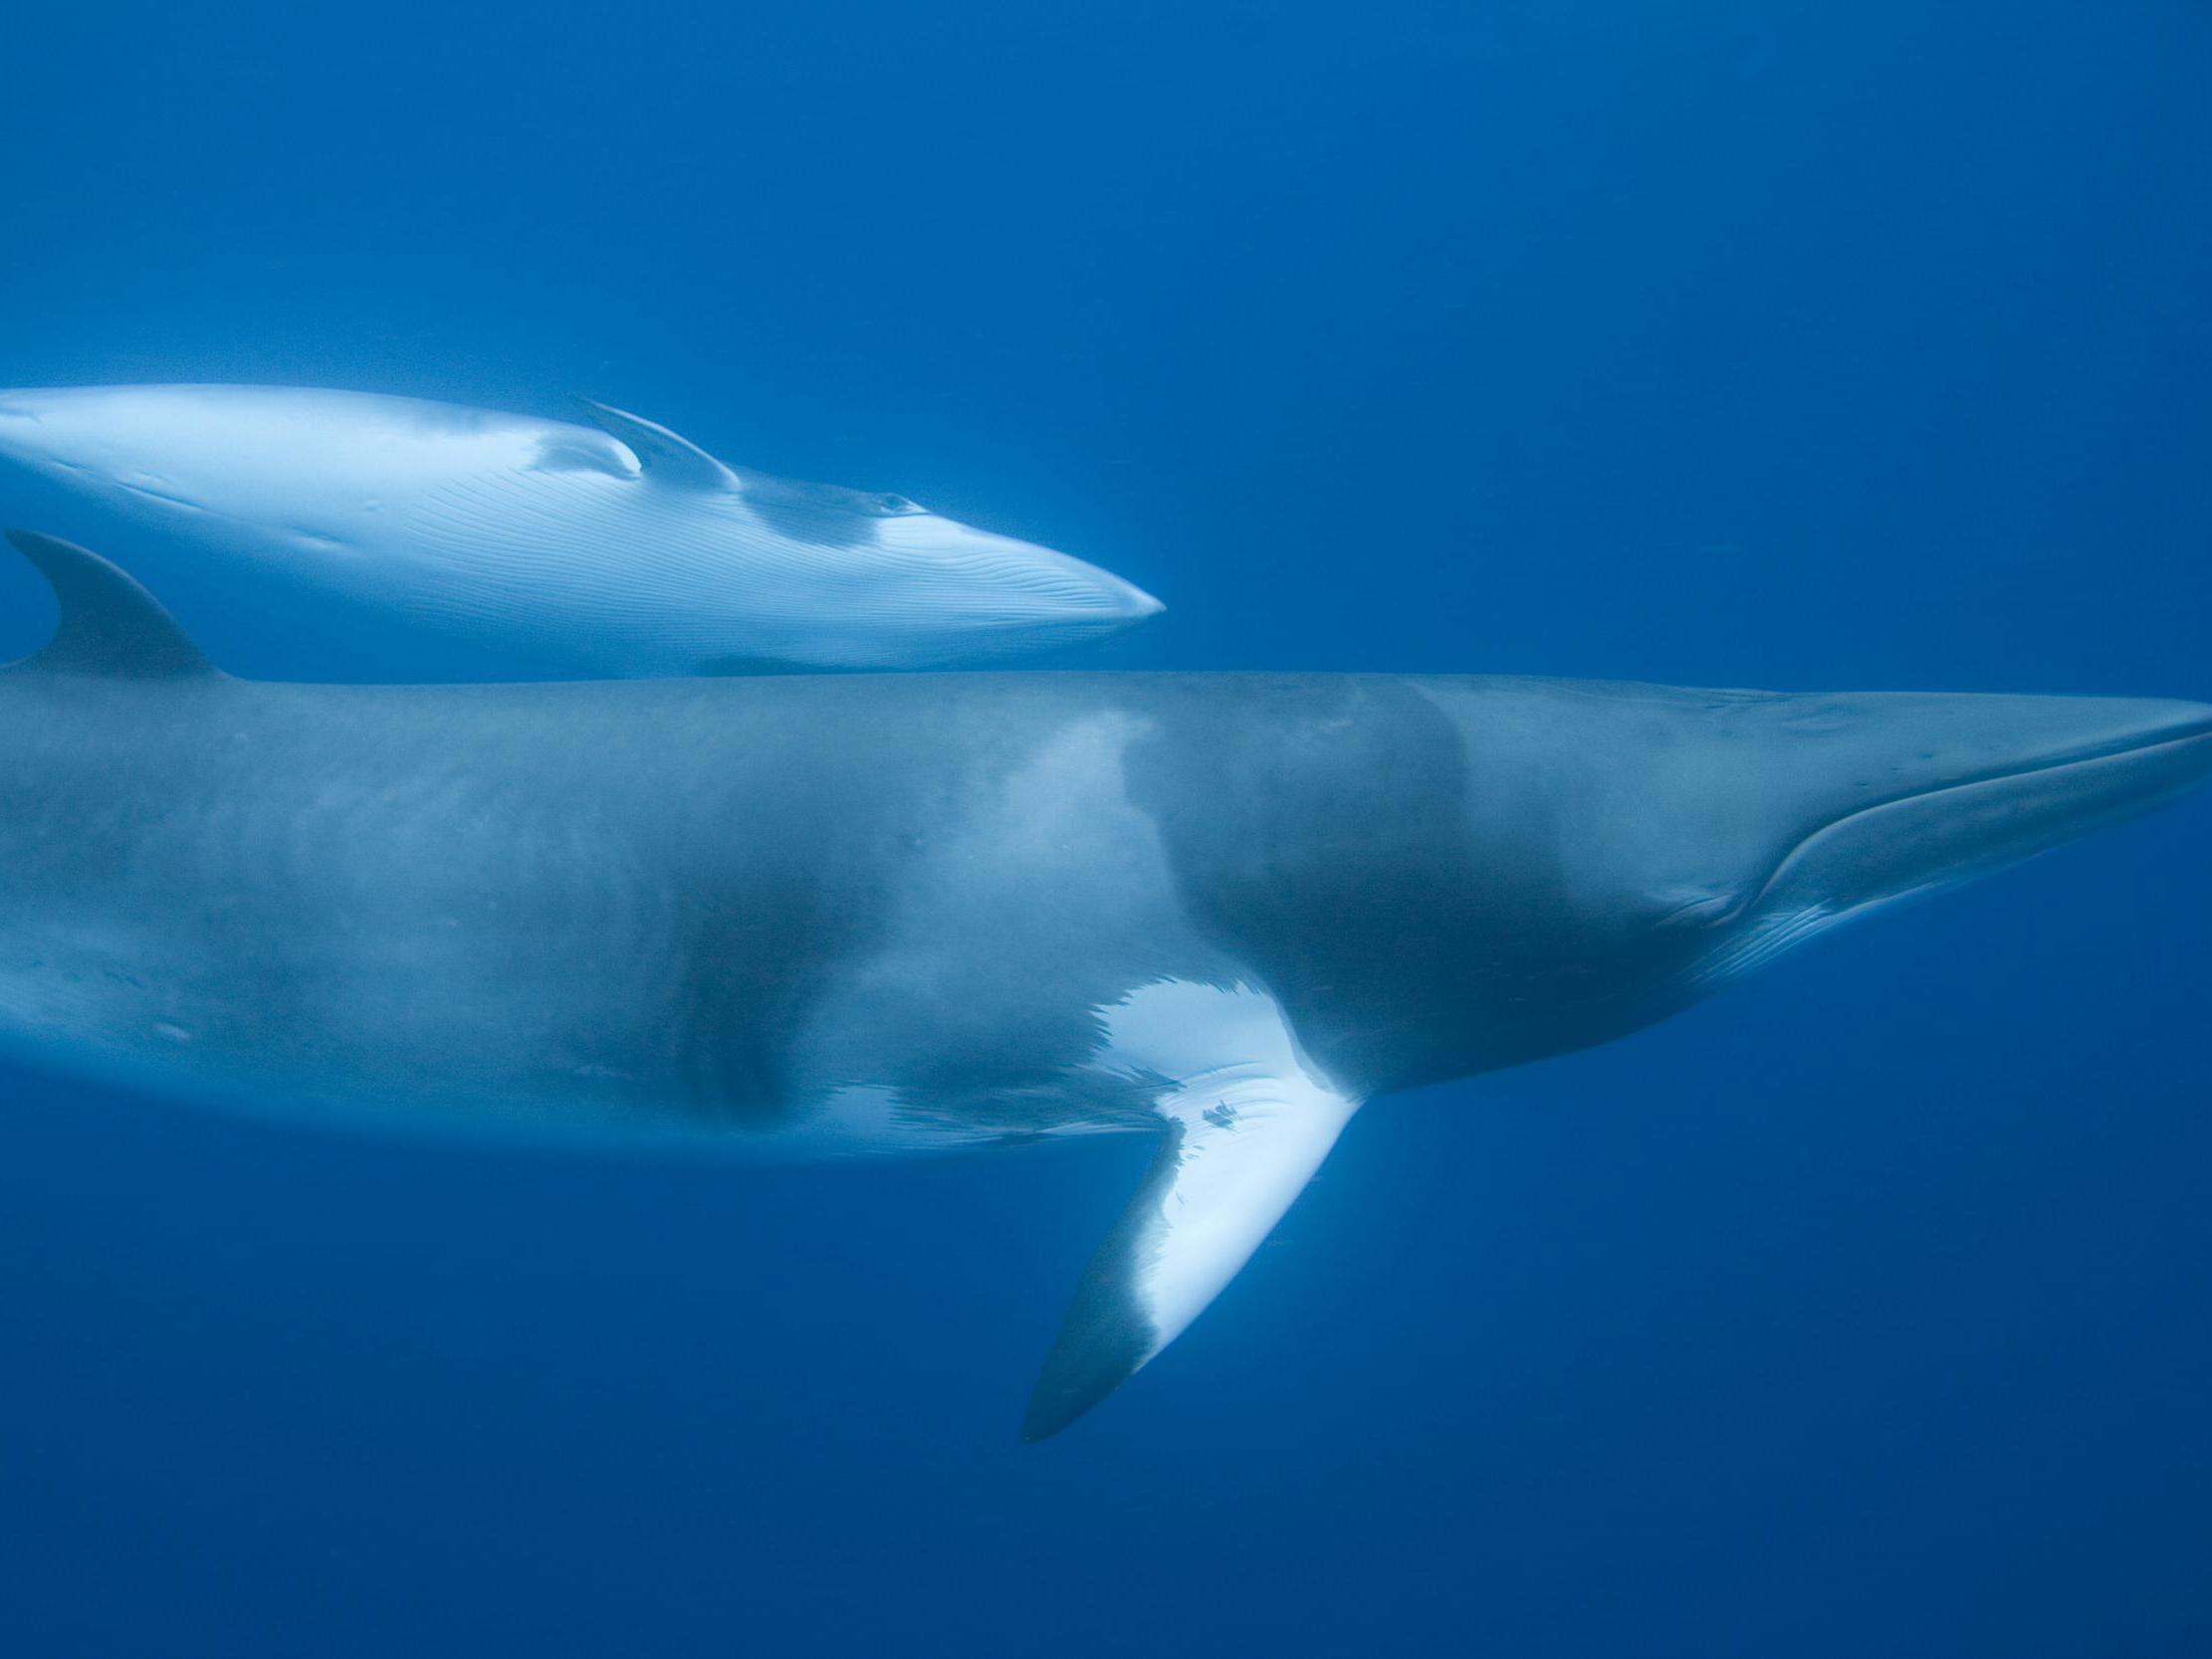 Japan kills 333 Antarctic minke whales each year in the Southern Ocean